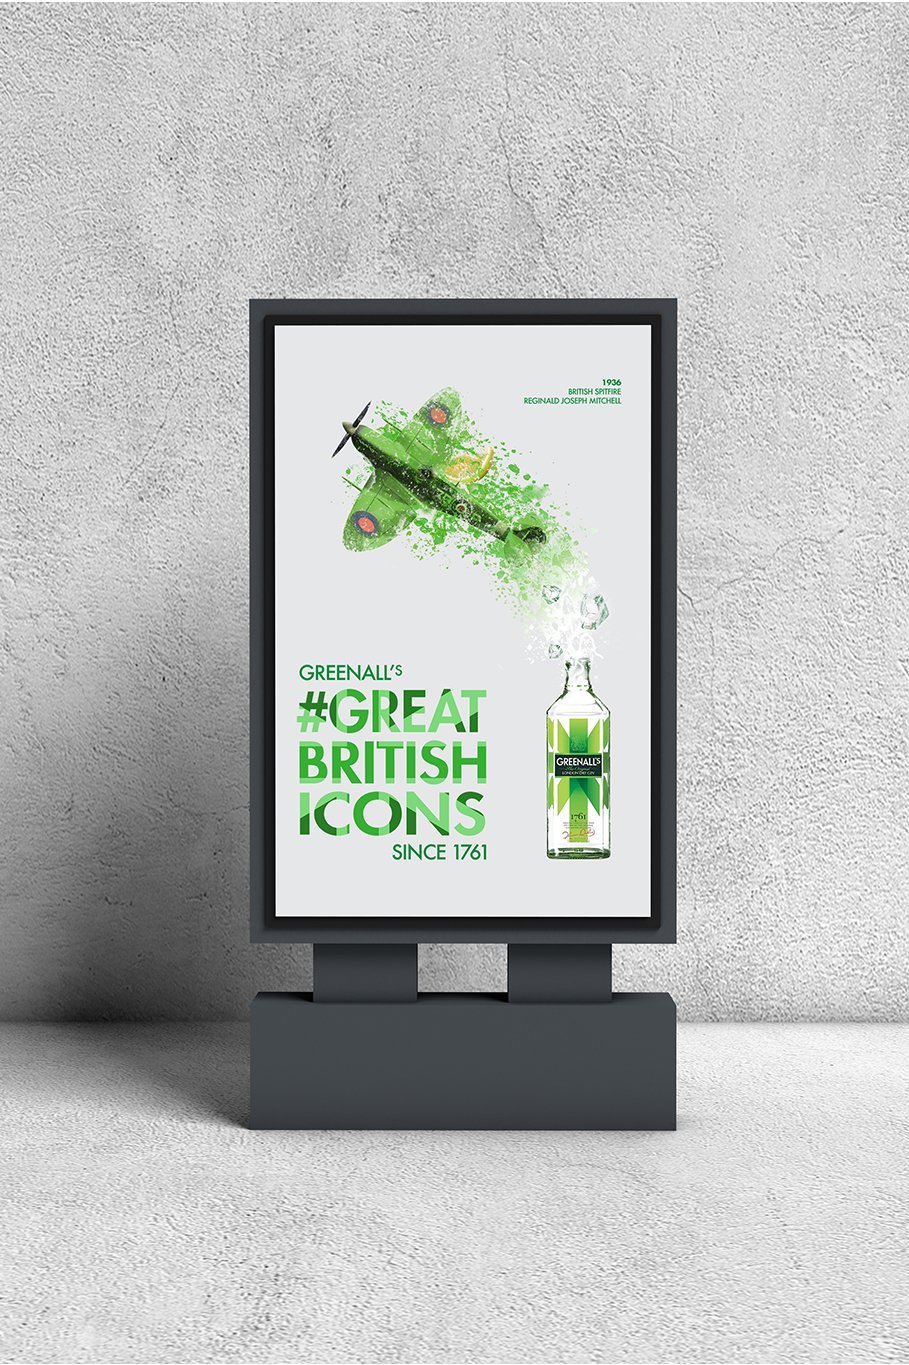 Greenall's Marketing Campaign